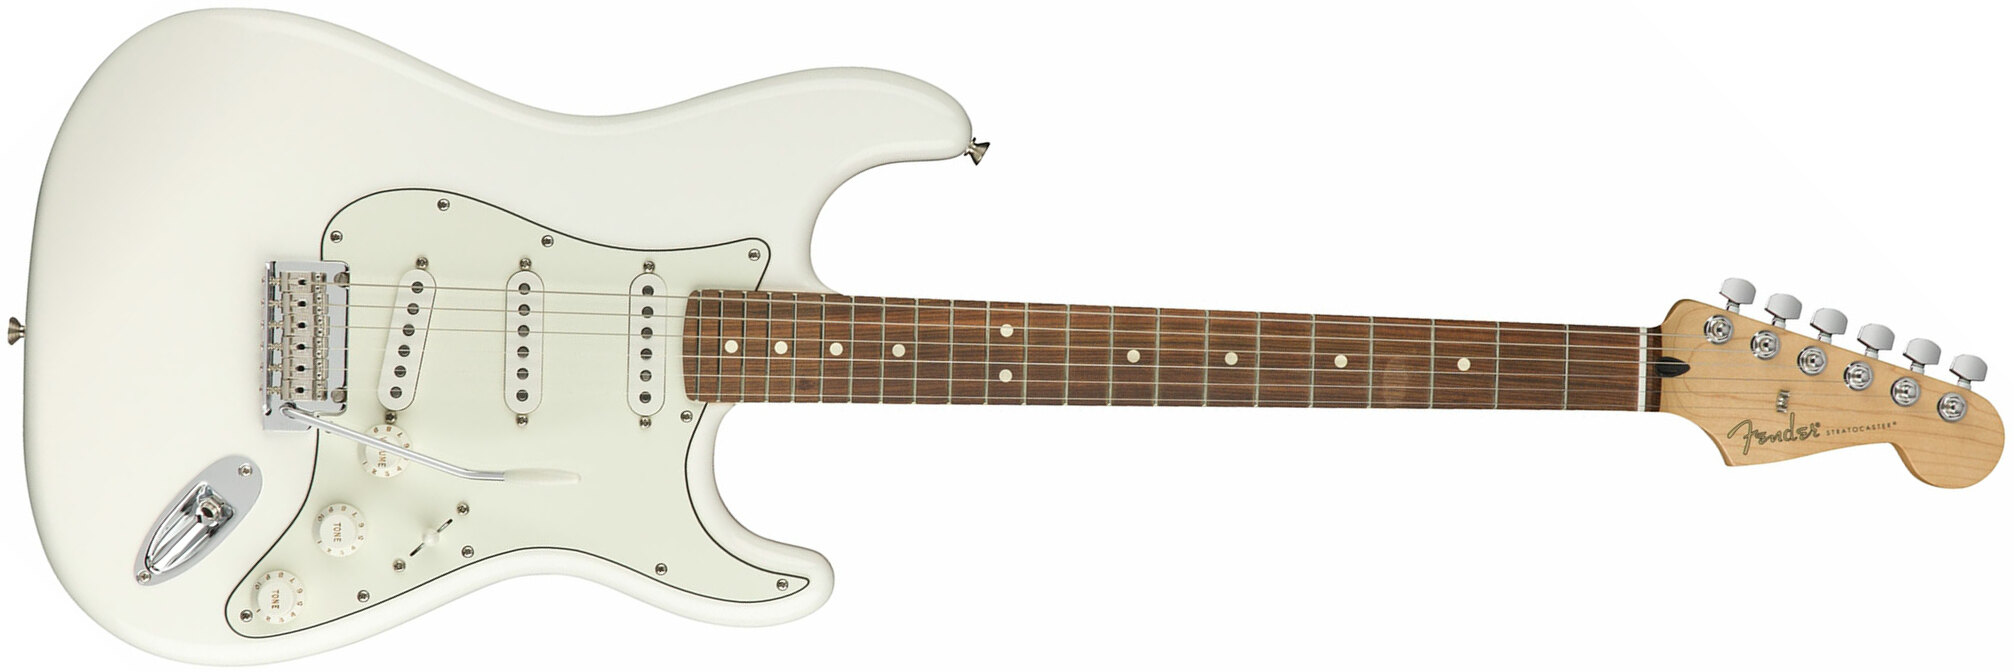 Fender Strat Player Mex Sss Pf - Polar White - E-Gitarre in Str-Form - Main picture